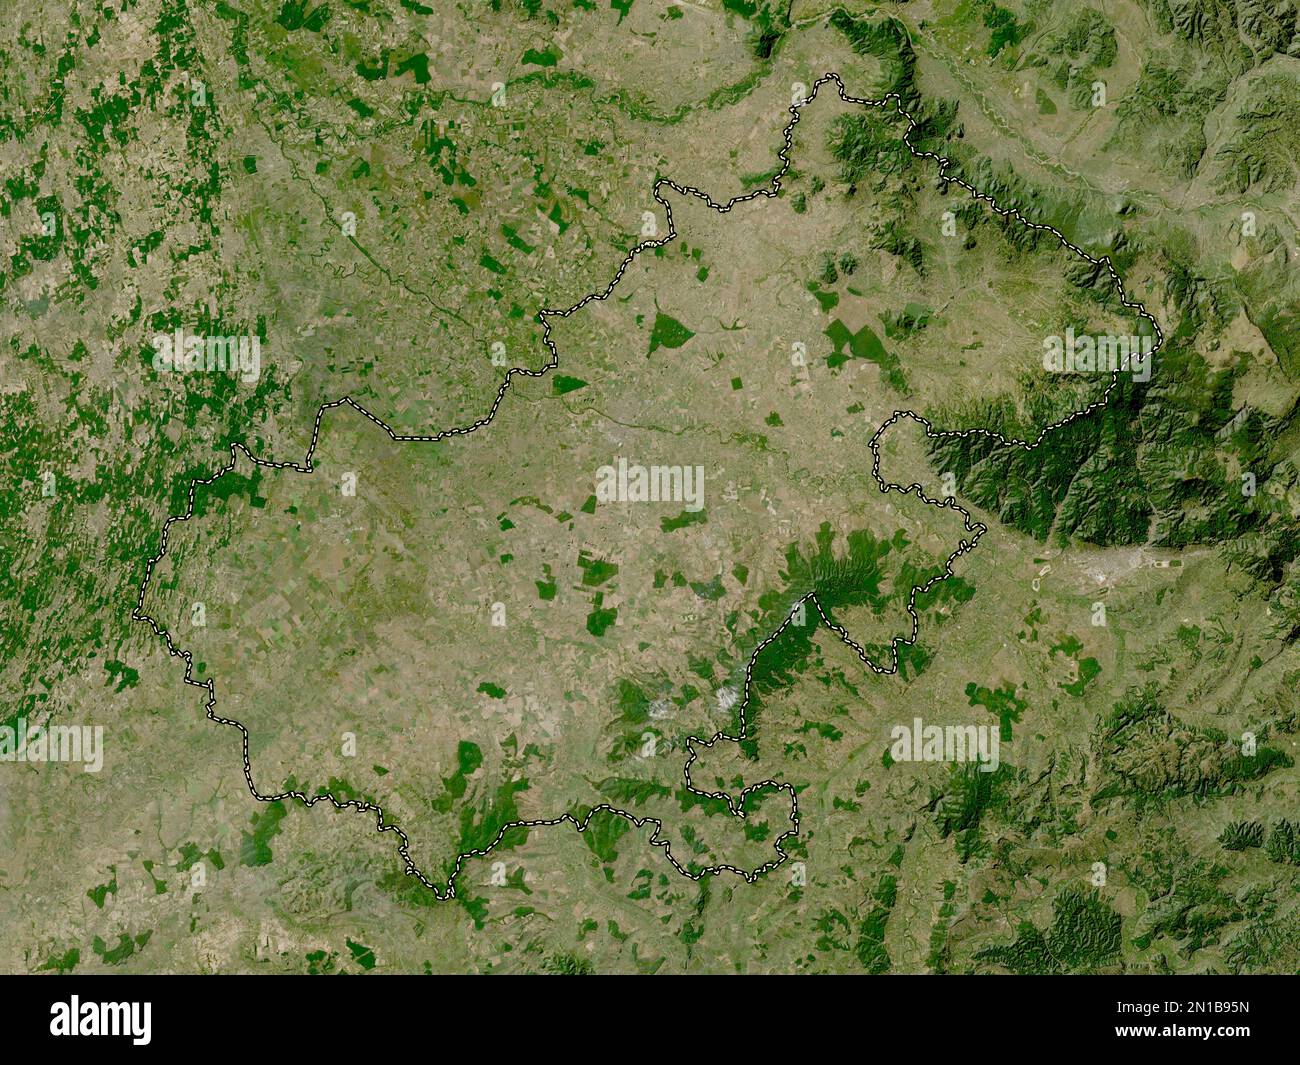 Satu Mare, county of Romania. Low resolution satellite map Stock Photo